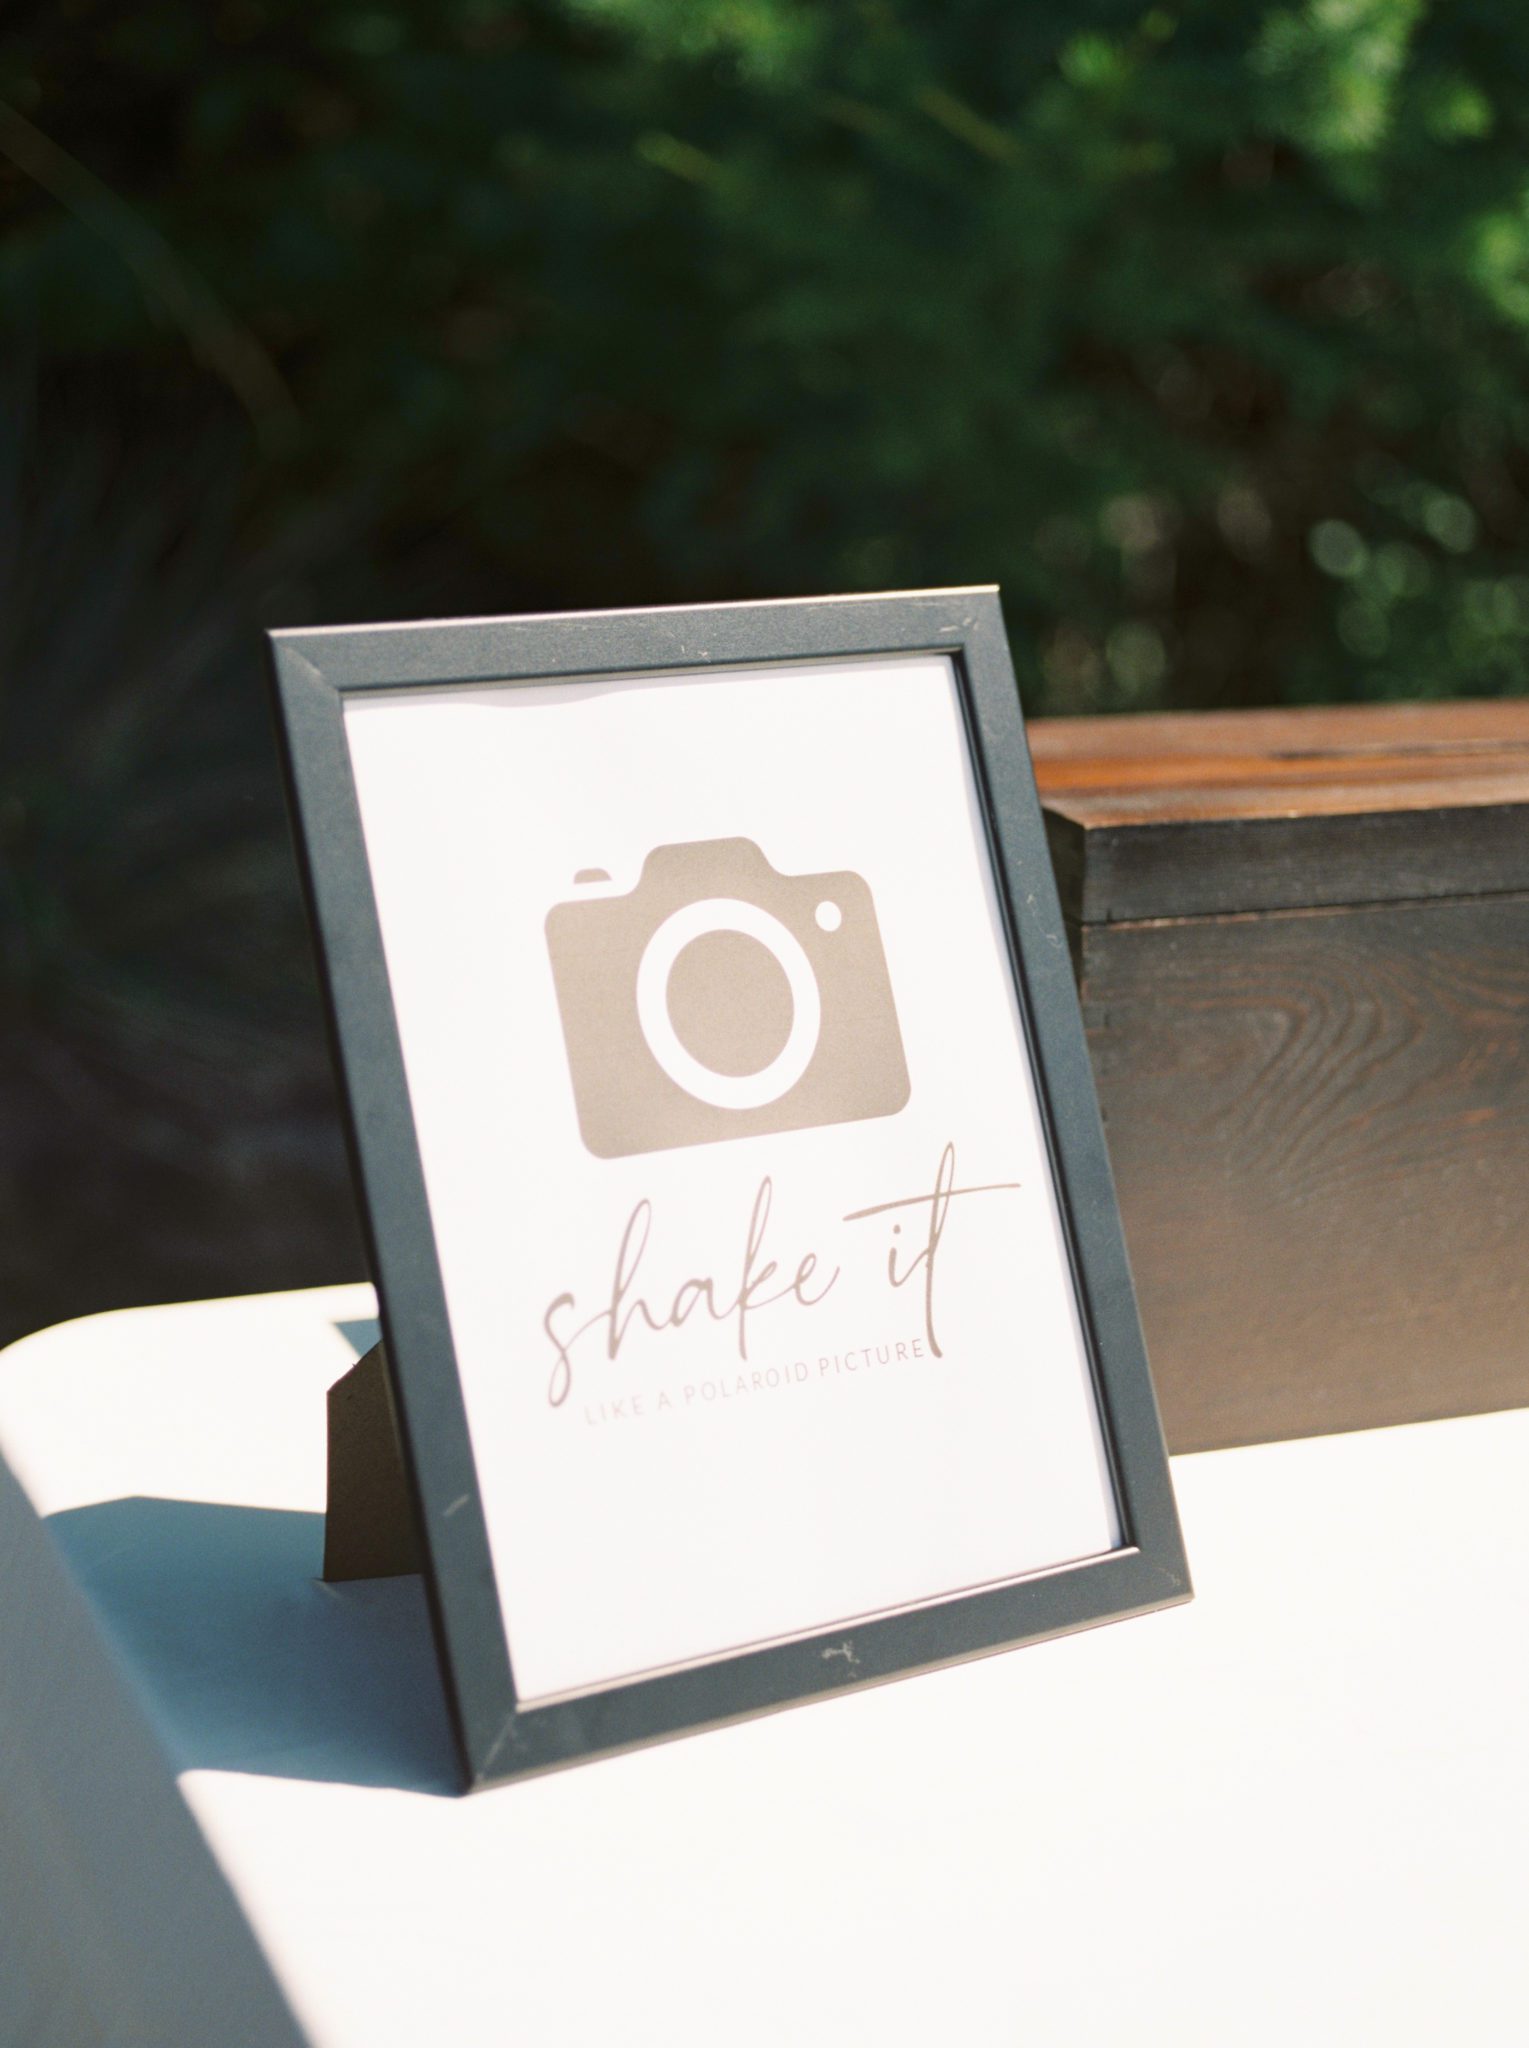 Polaroid photo station at a wedding ceremony